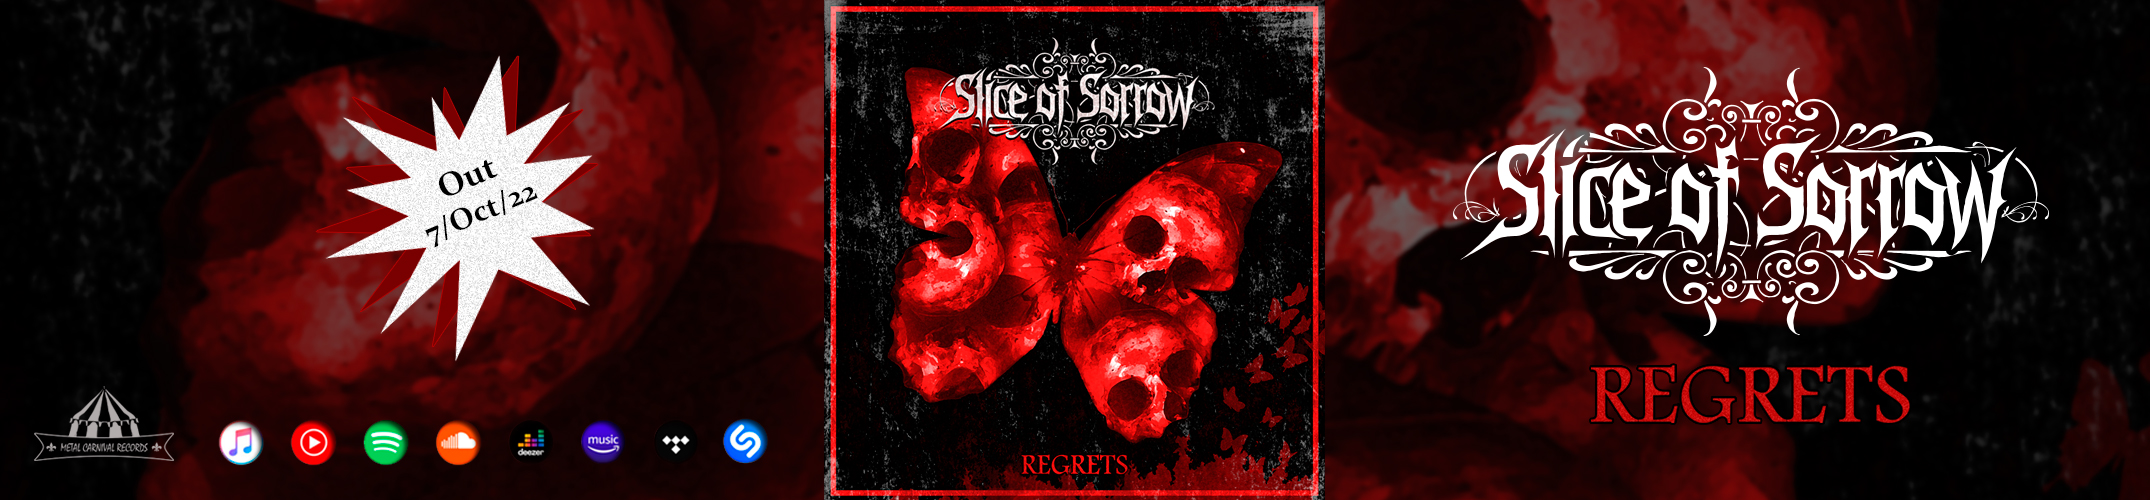 Slice of Sorrow Regrets